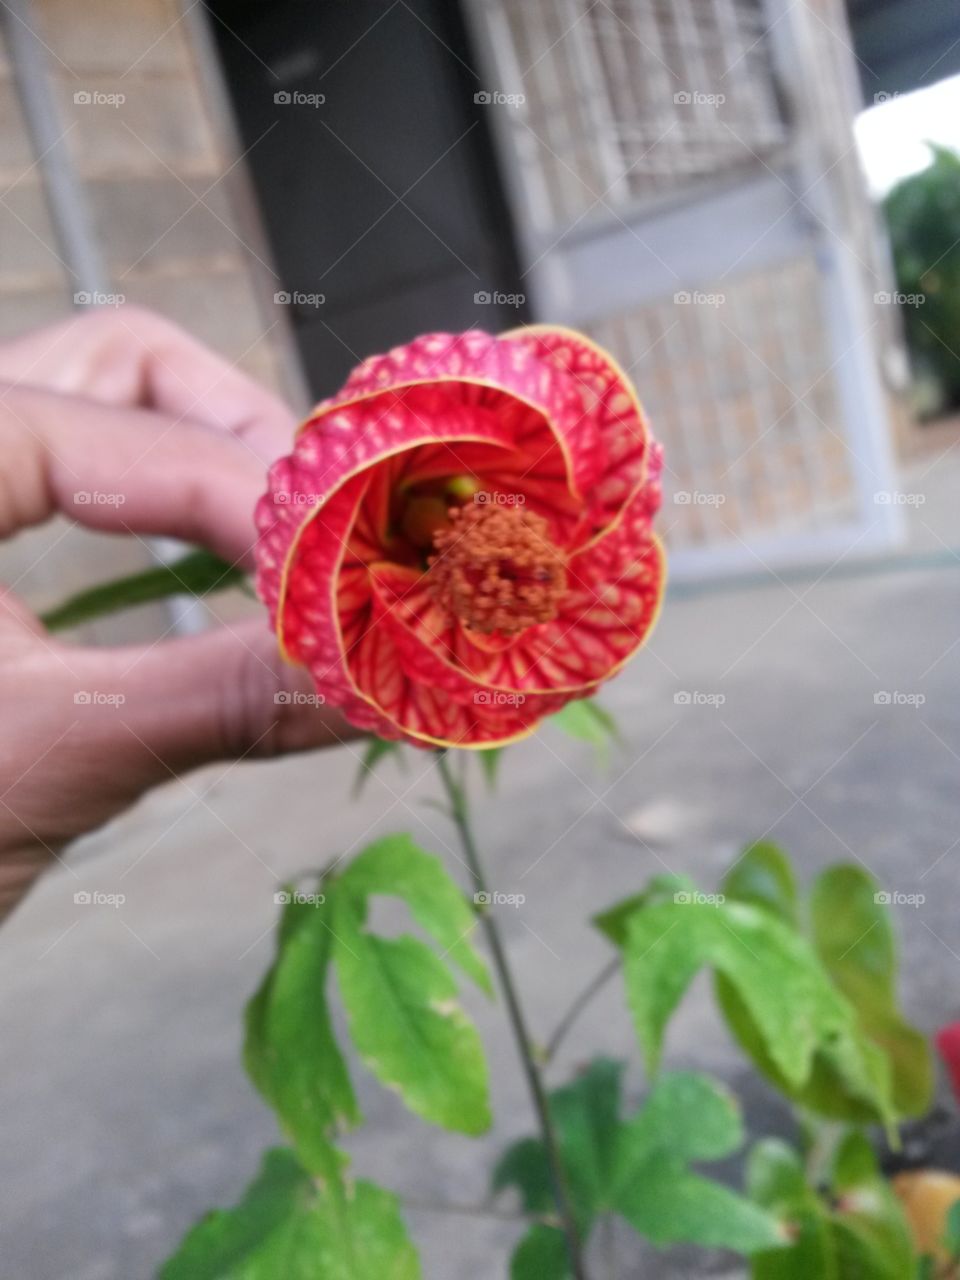 My mom's Chinese flower.